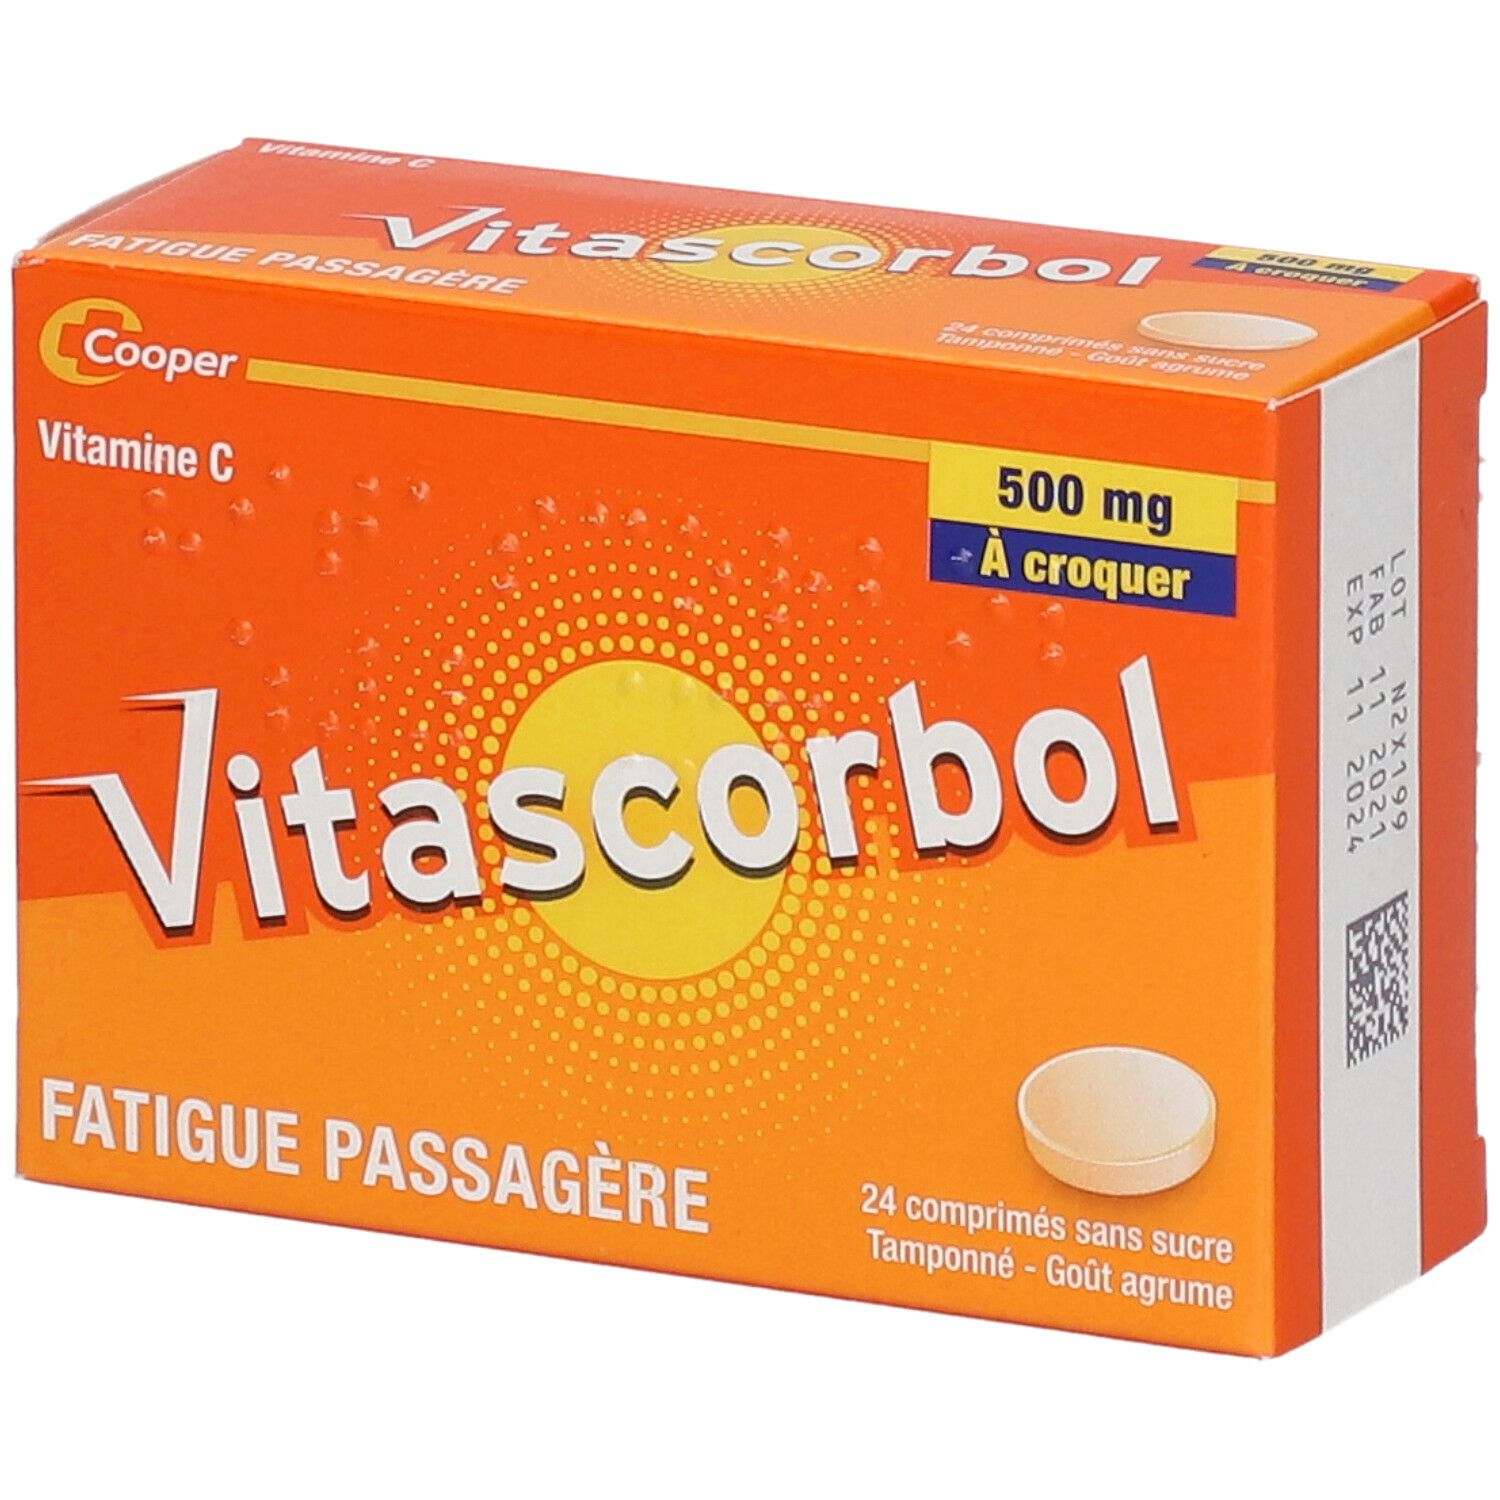 Vitascorbol Vitamine C s/s 500 mg